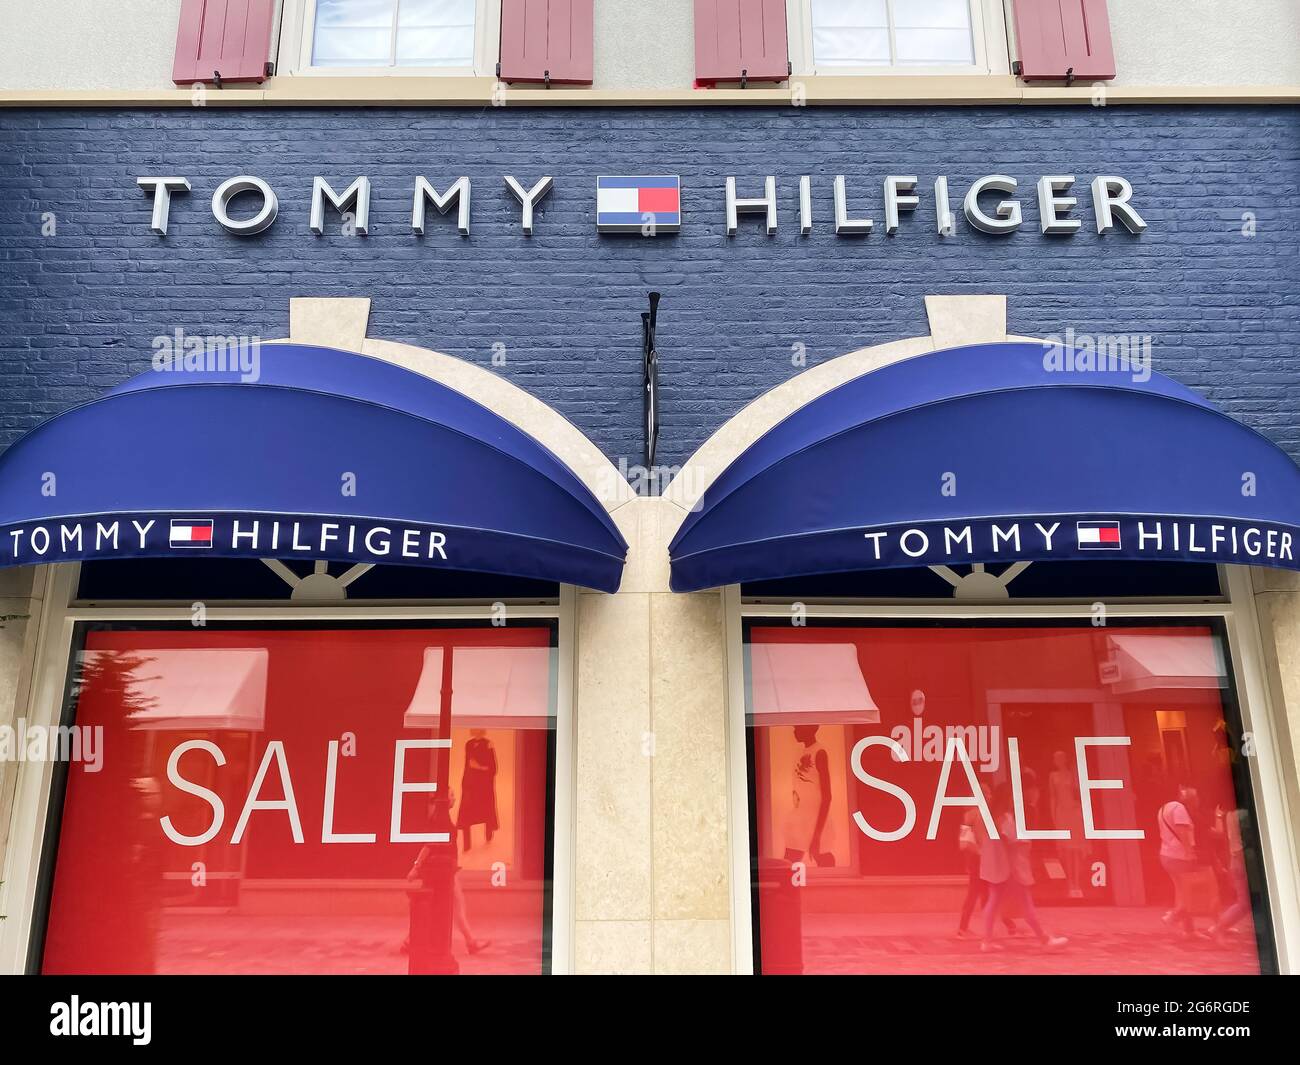 Tommy hilfiger designer label hi-res stock photography and images - Alamy